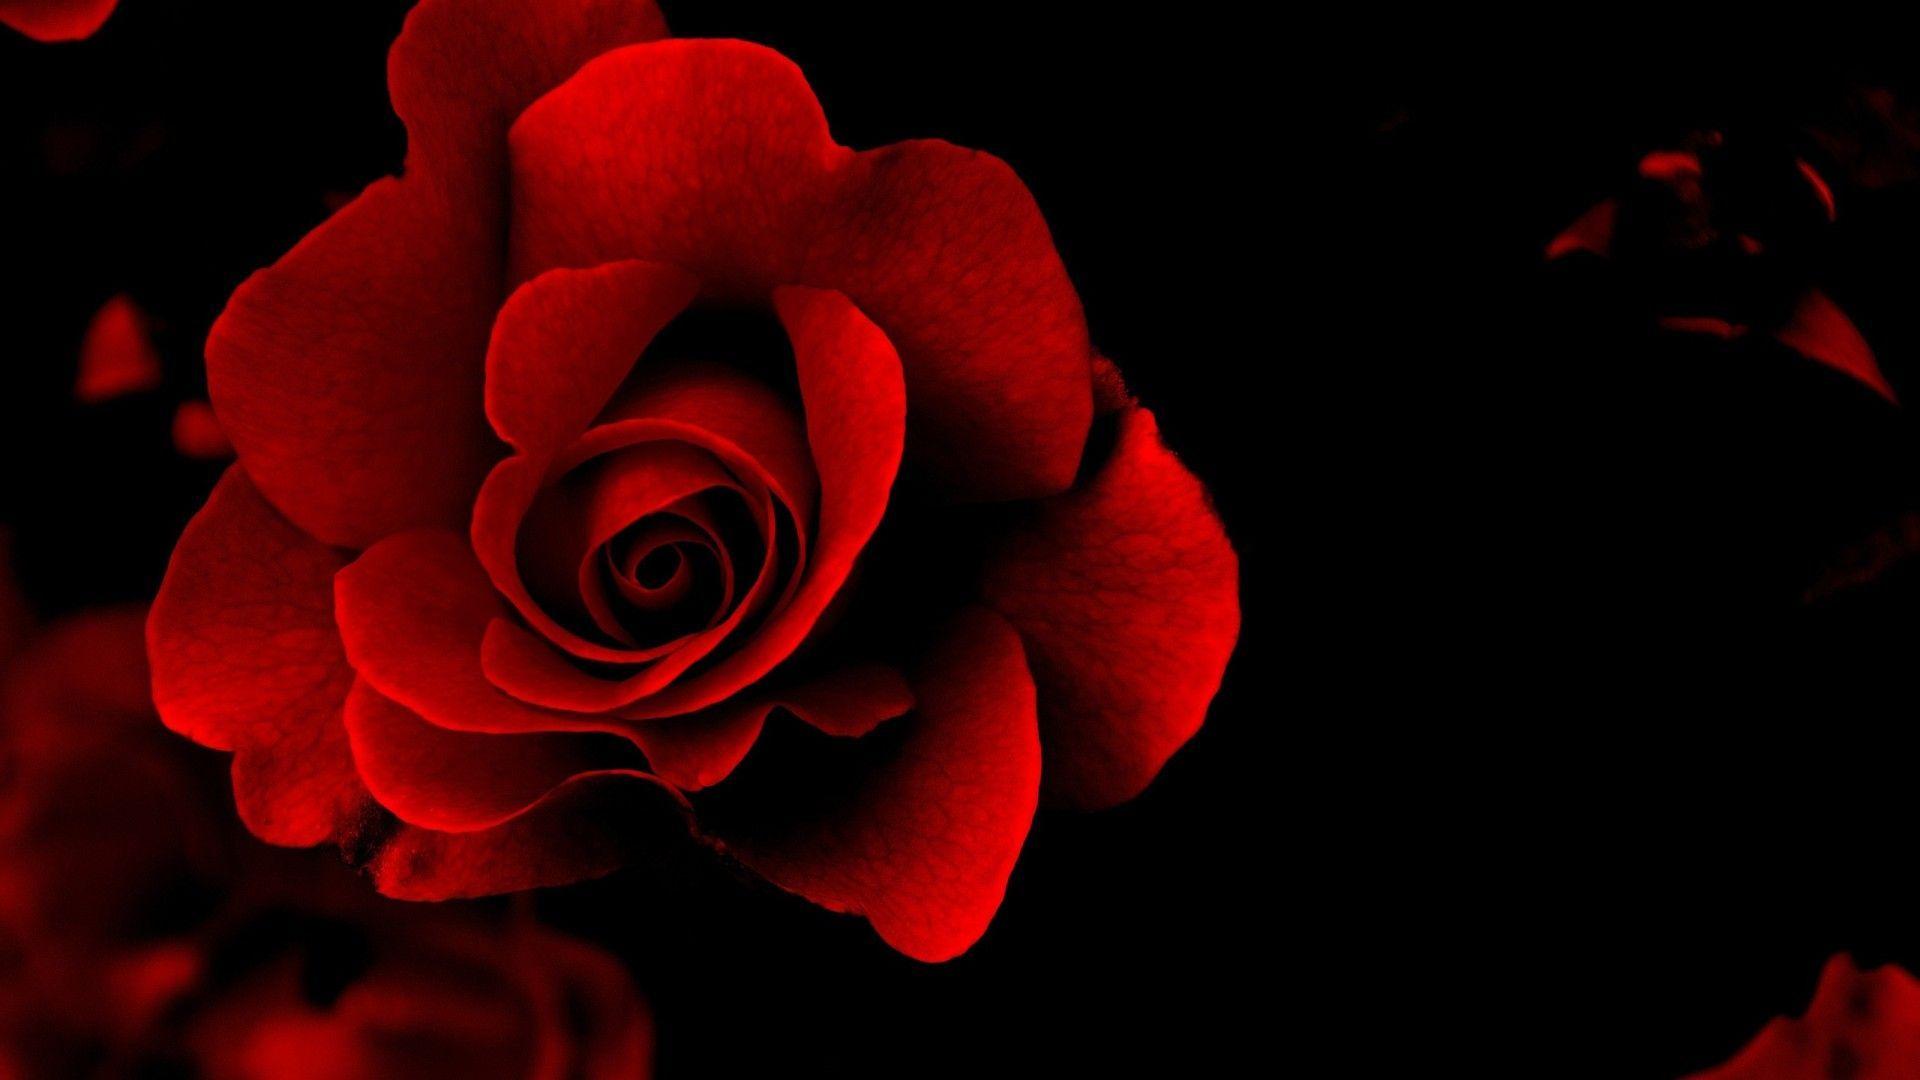 ROSE ROUGE. Red flower wallpaper, Red rose flower, Red roses